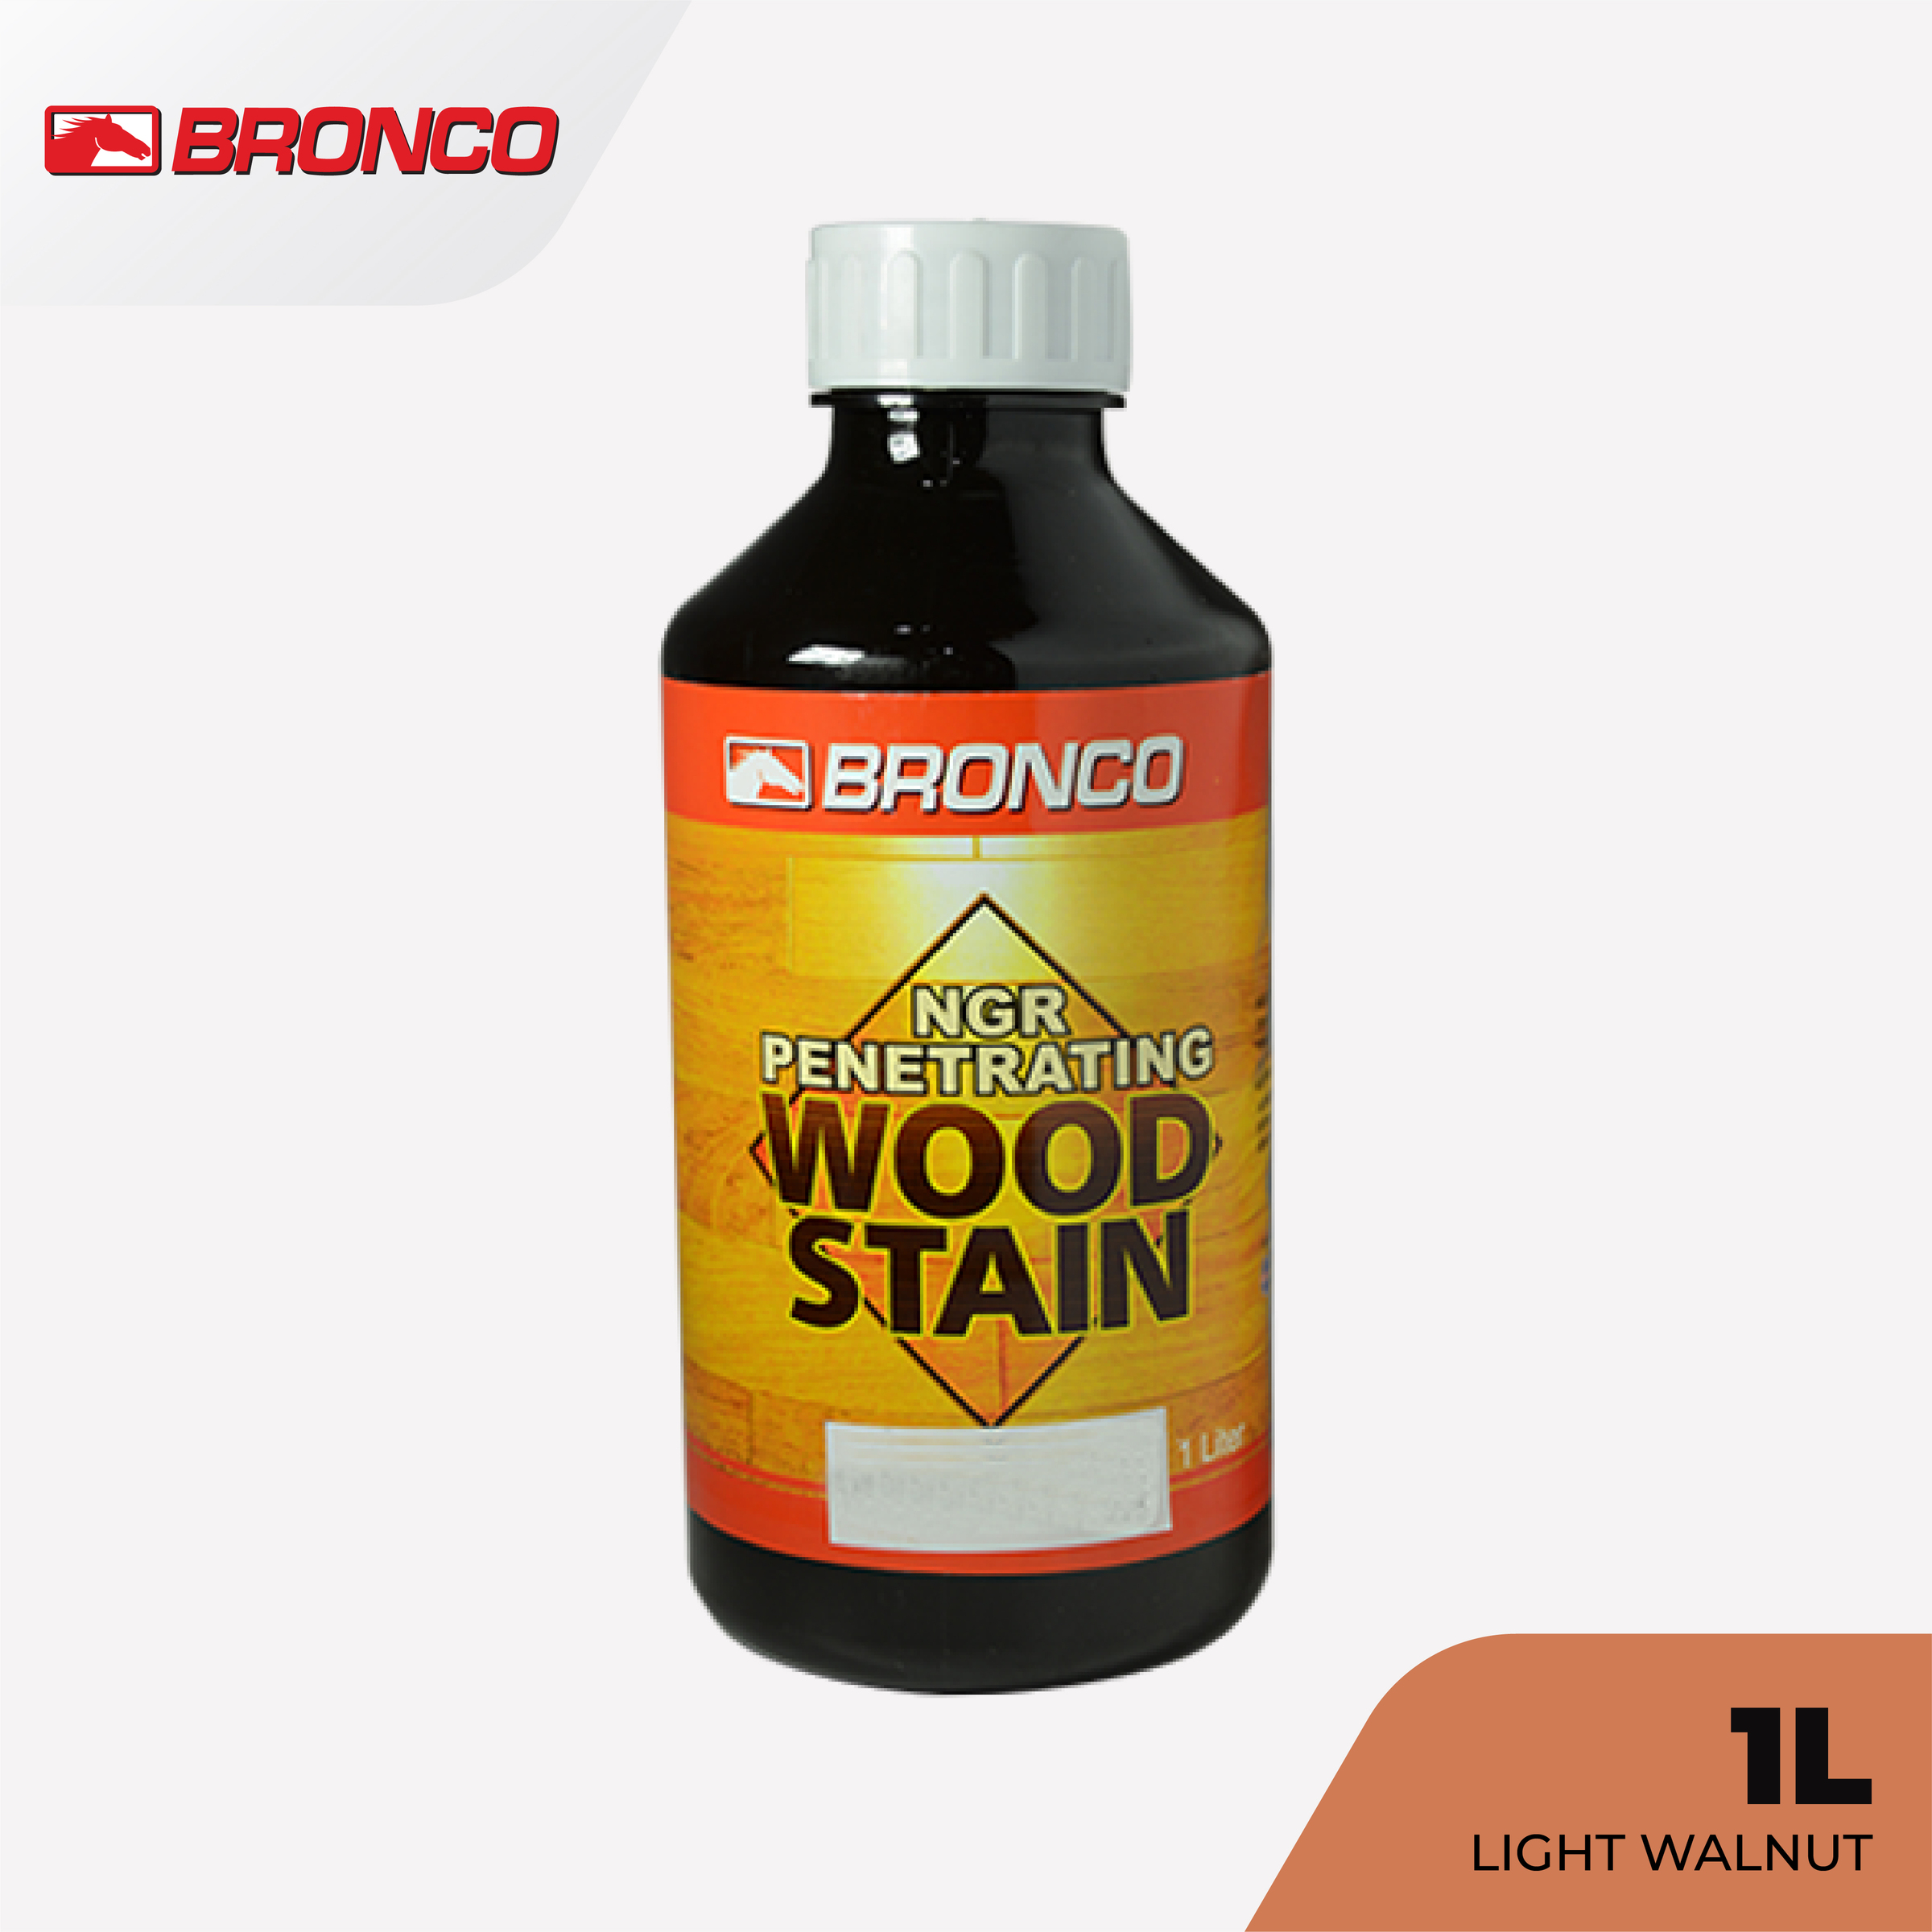 Bronco NGR Penetrating Wood Stain Light Walnut - 1L